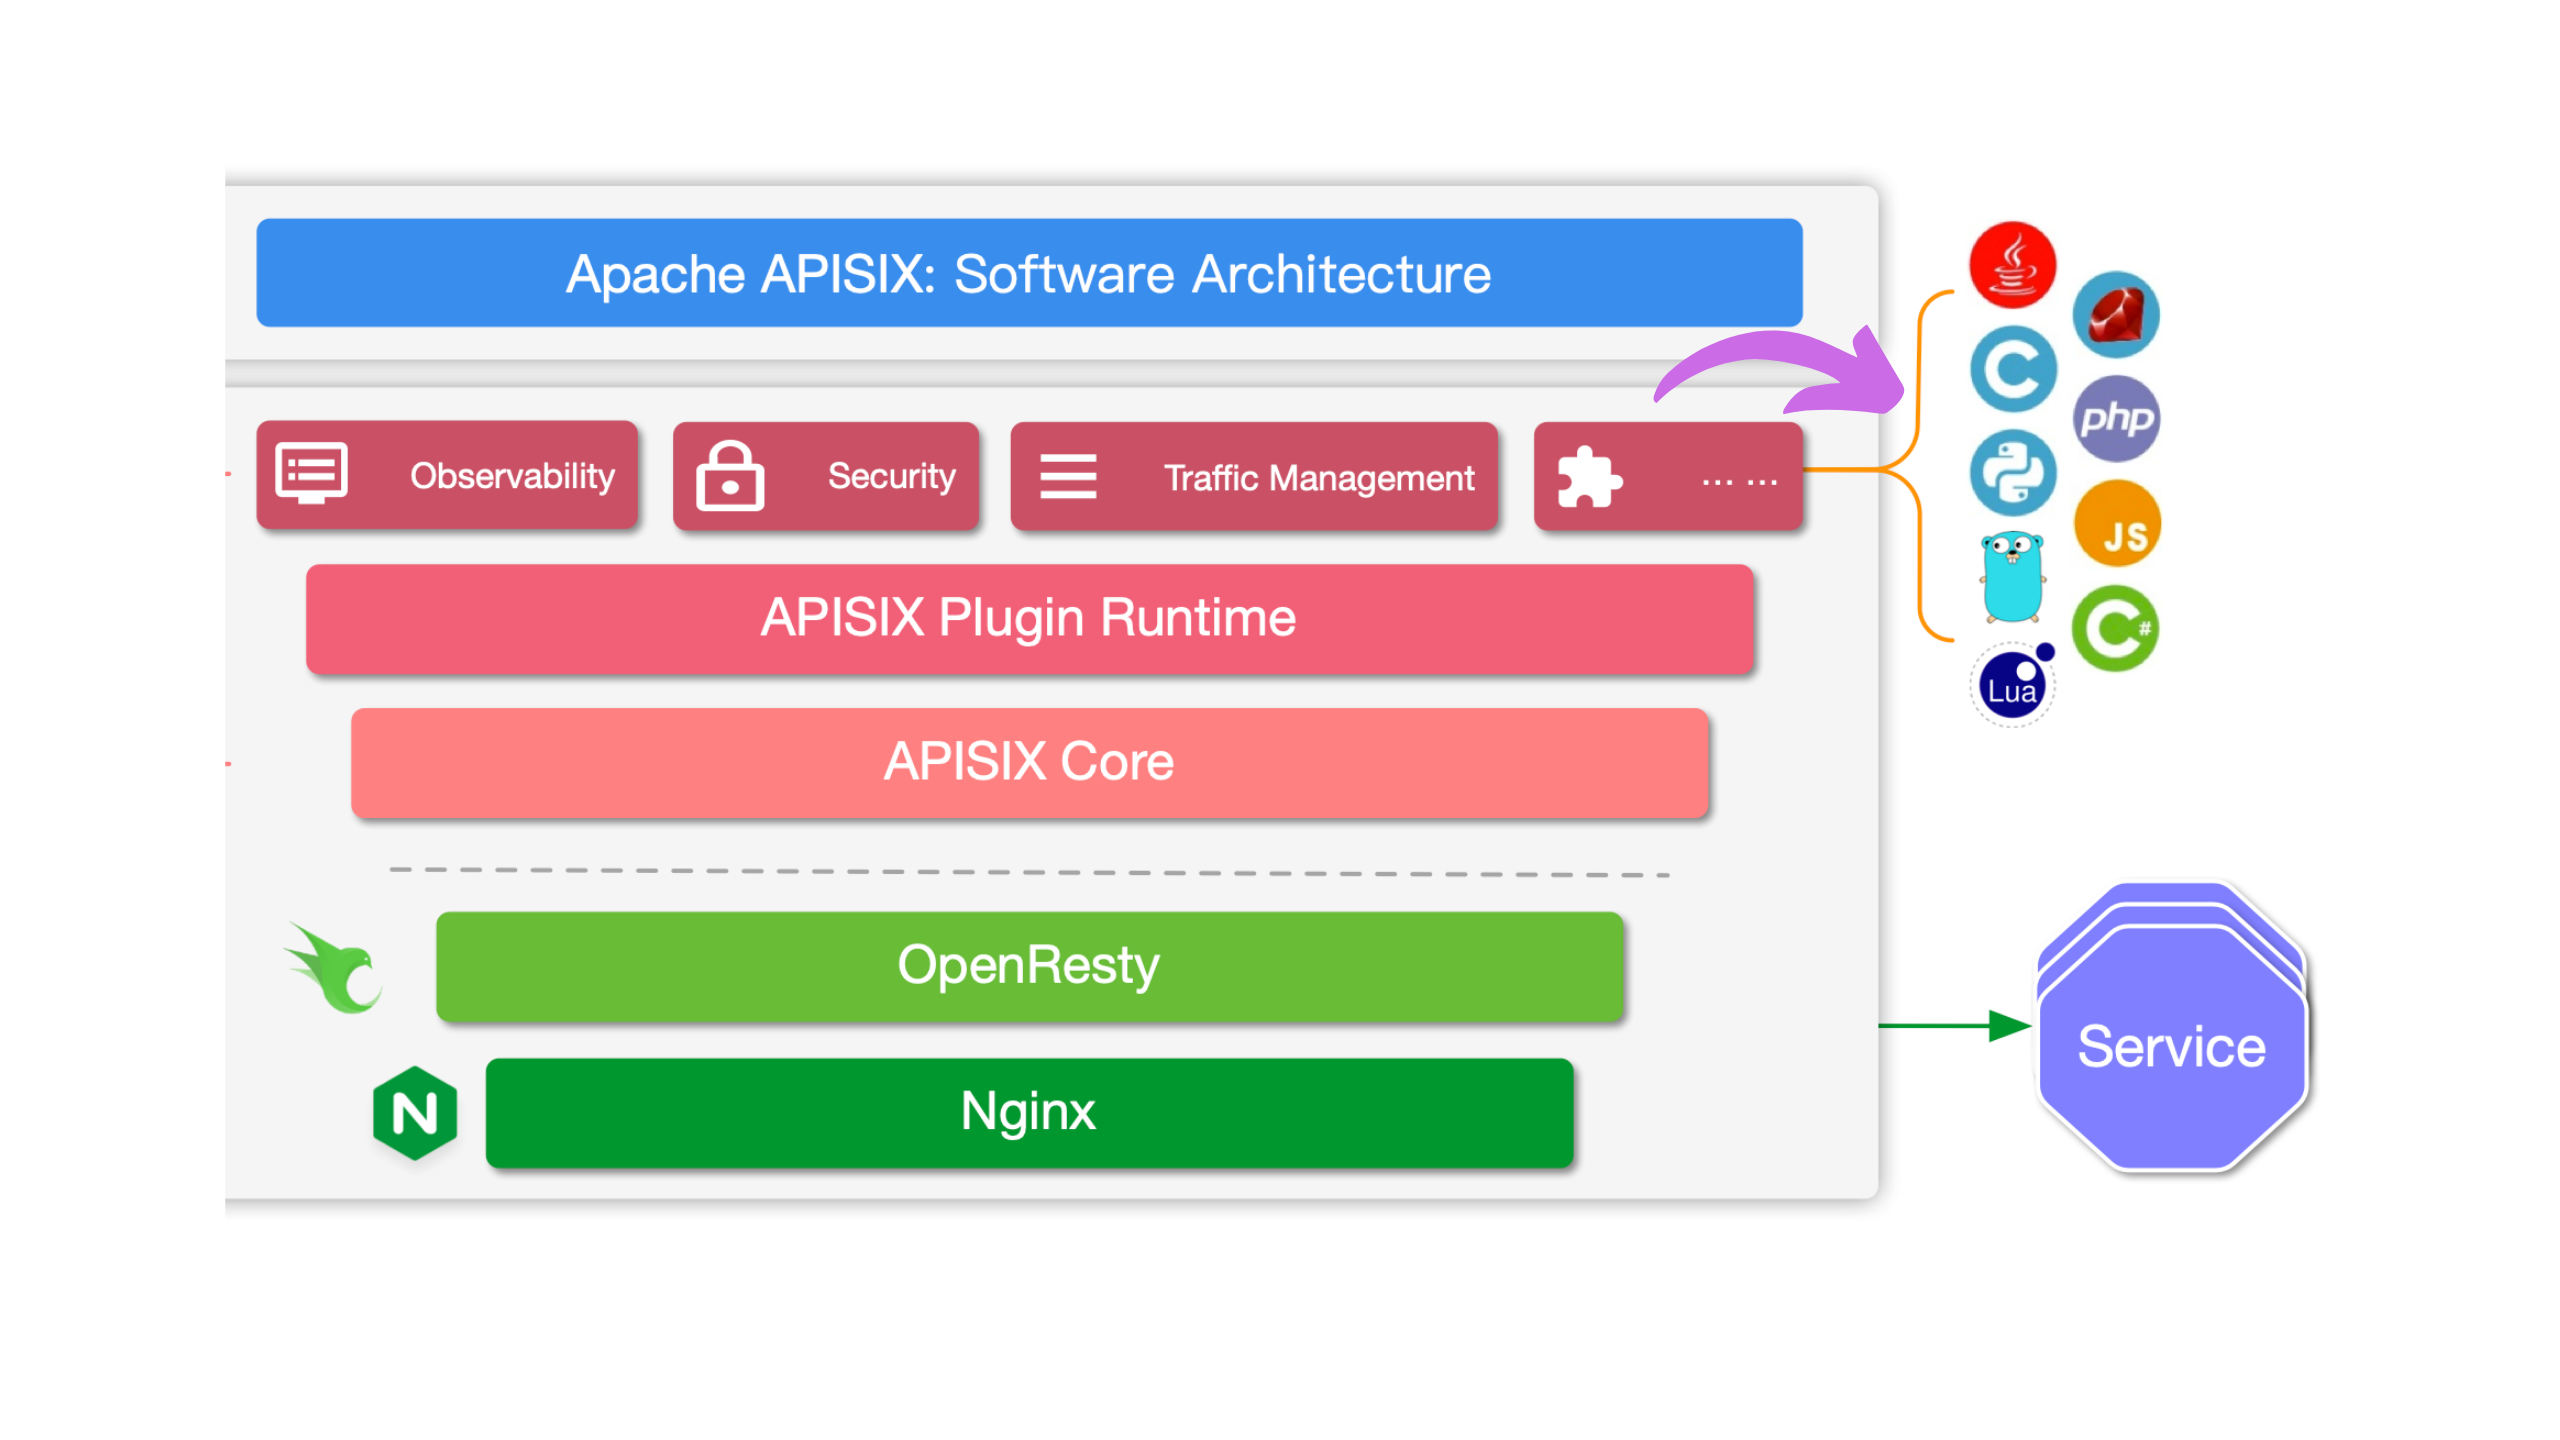 Apache APISIX Software Architecture